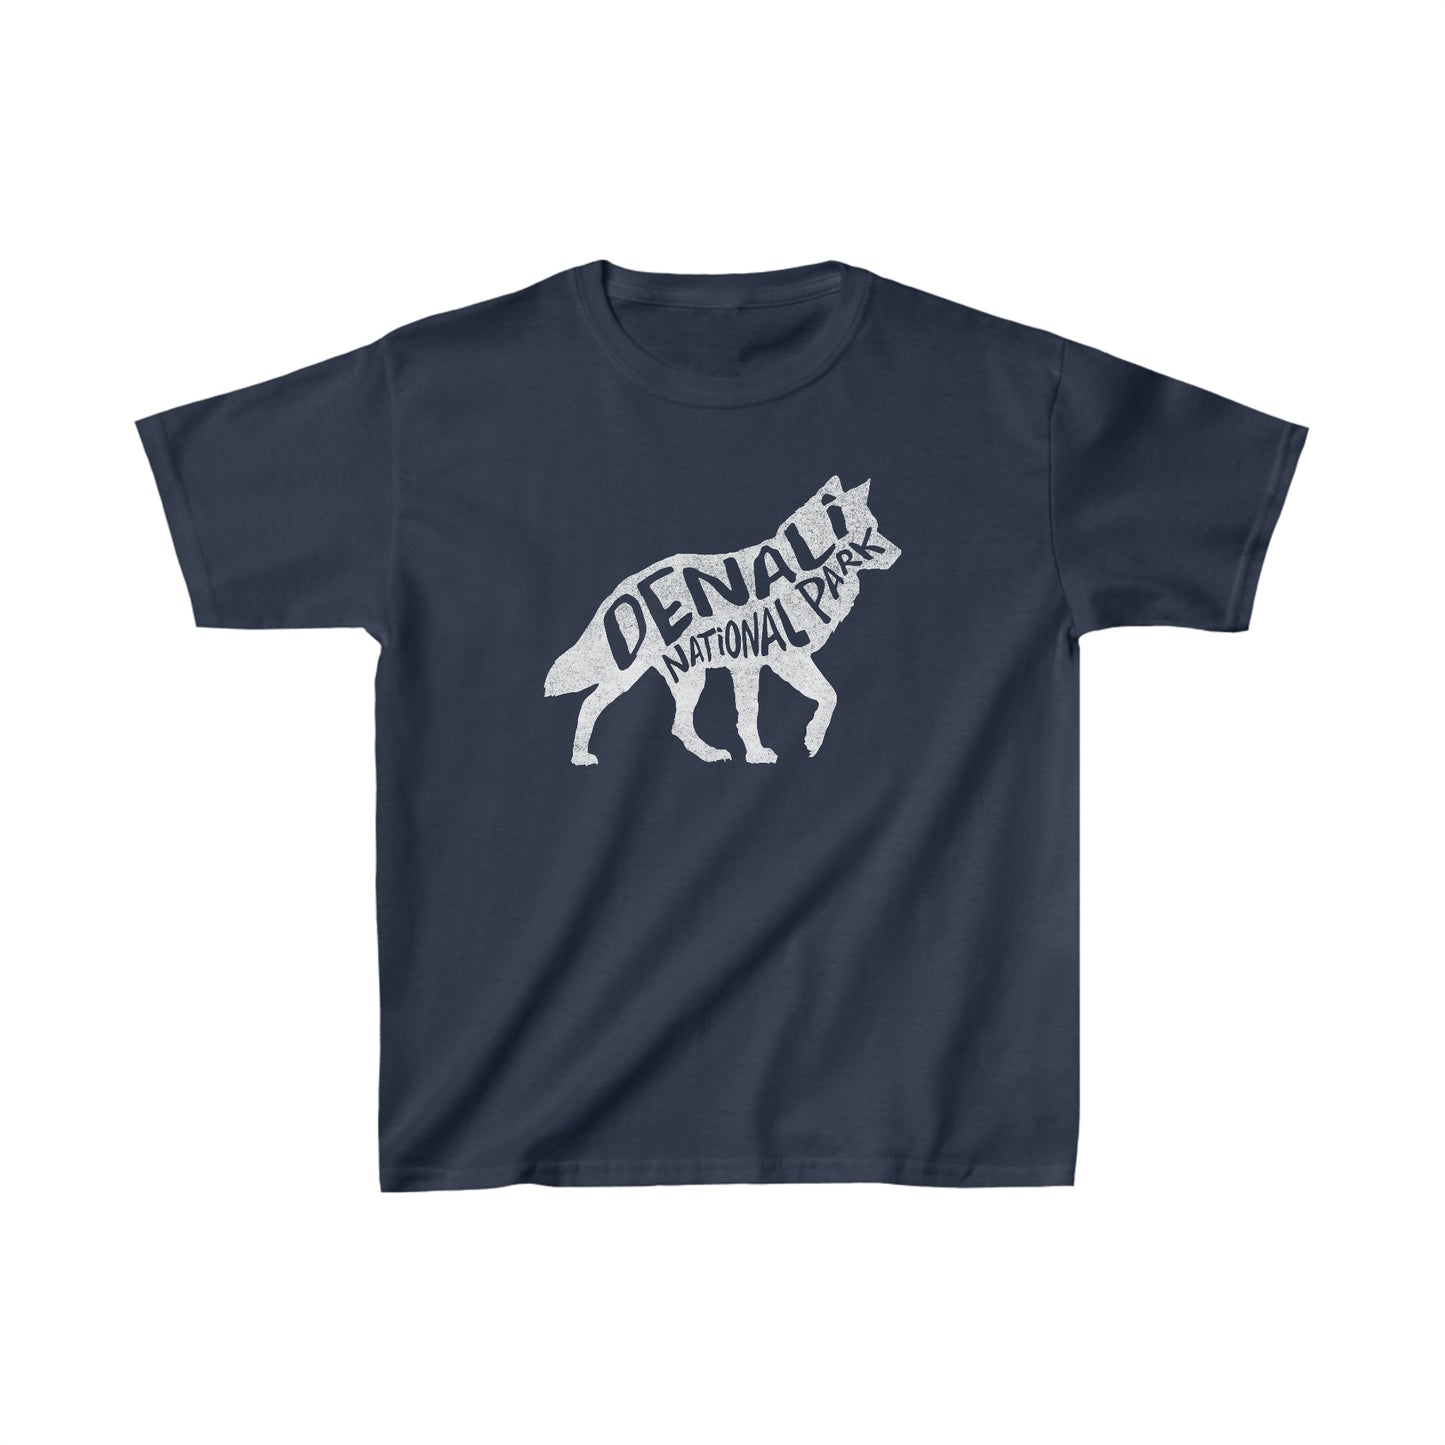 Denali National Park Child T-Shirt - Wolf Chunky Text